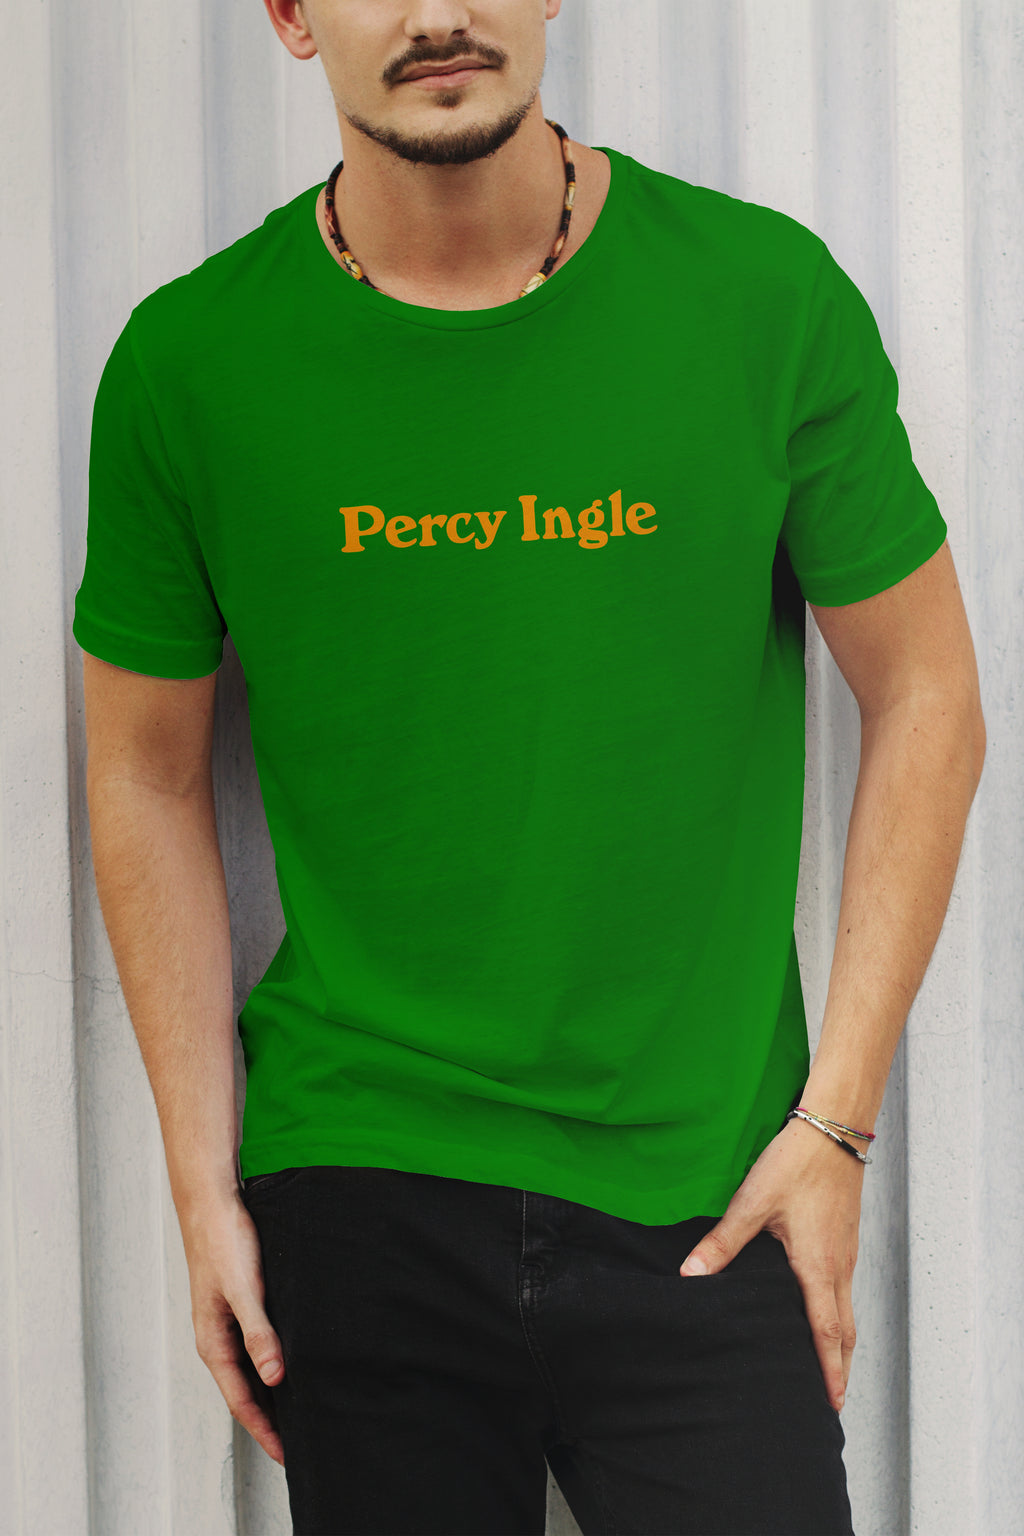 Percy Ingle T-Shirt